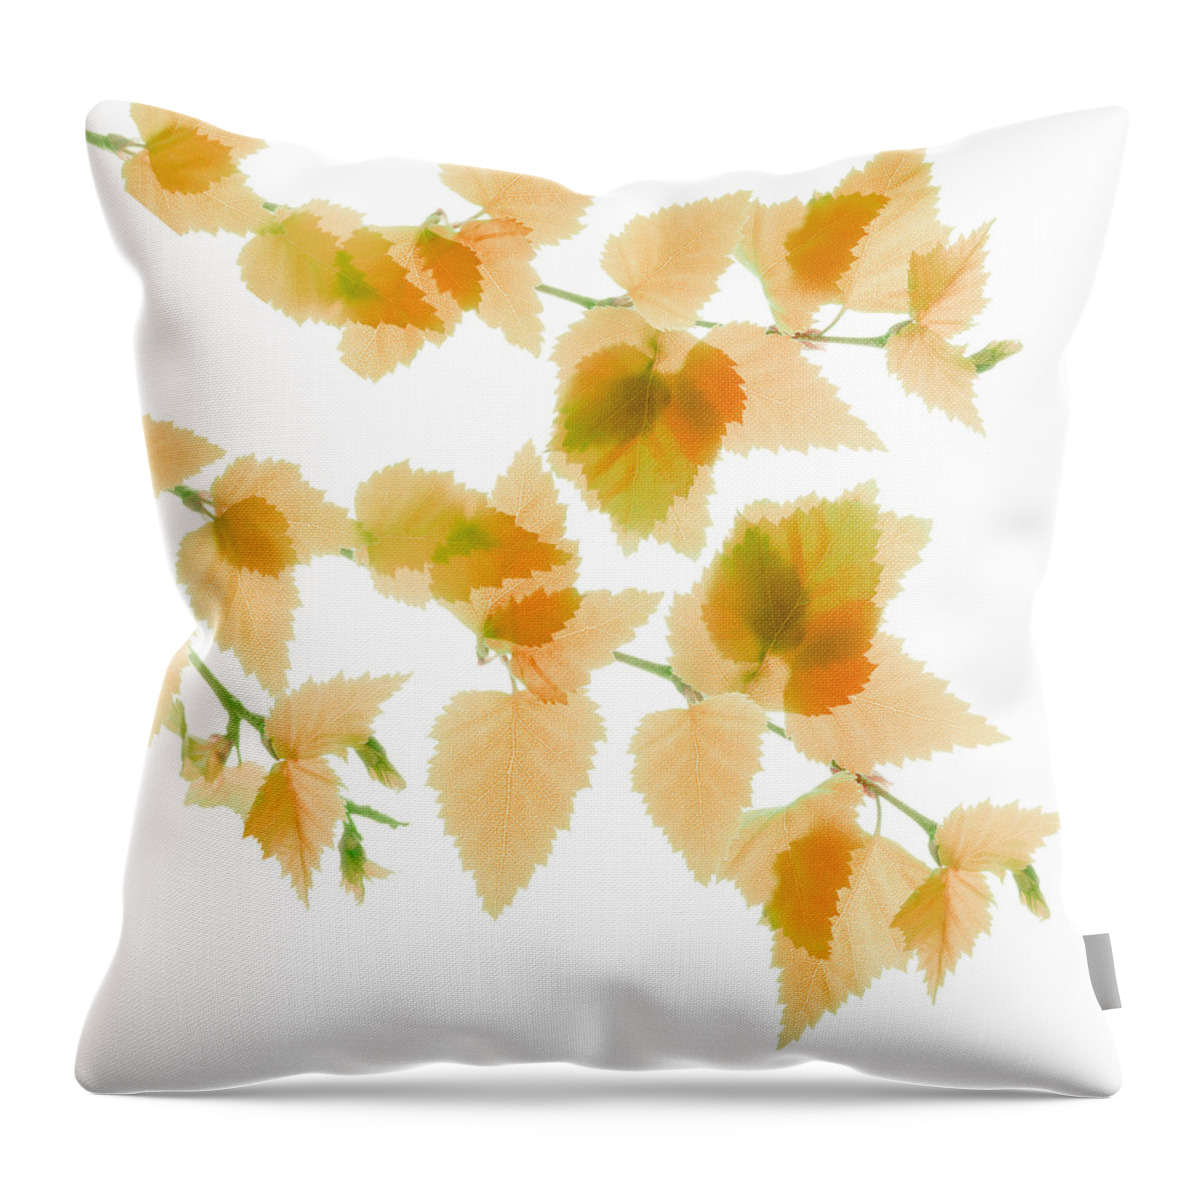 Betula Throw Pillow featuring the photograph Tangerine Birch Babies by Marsha Tudor